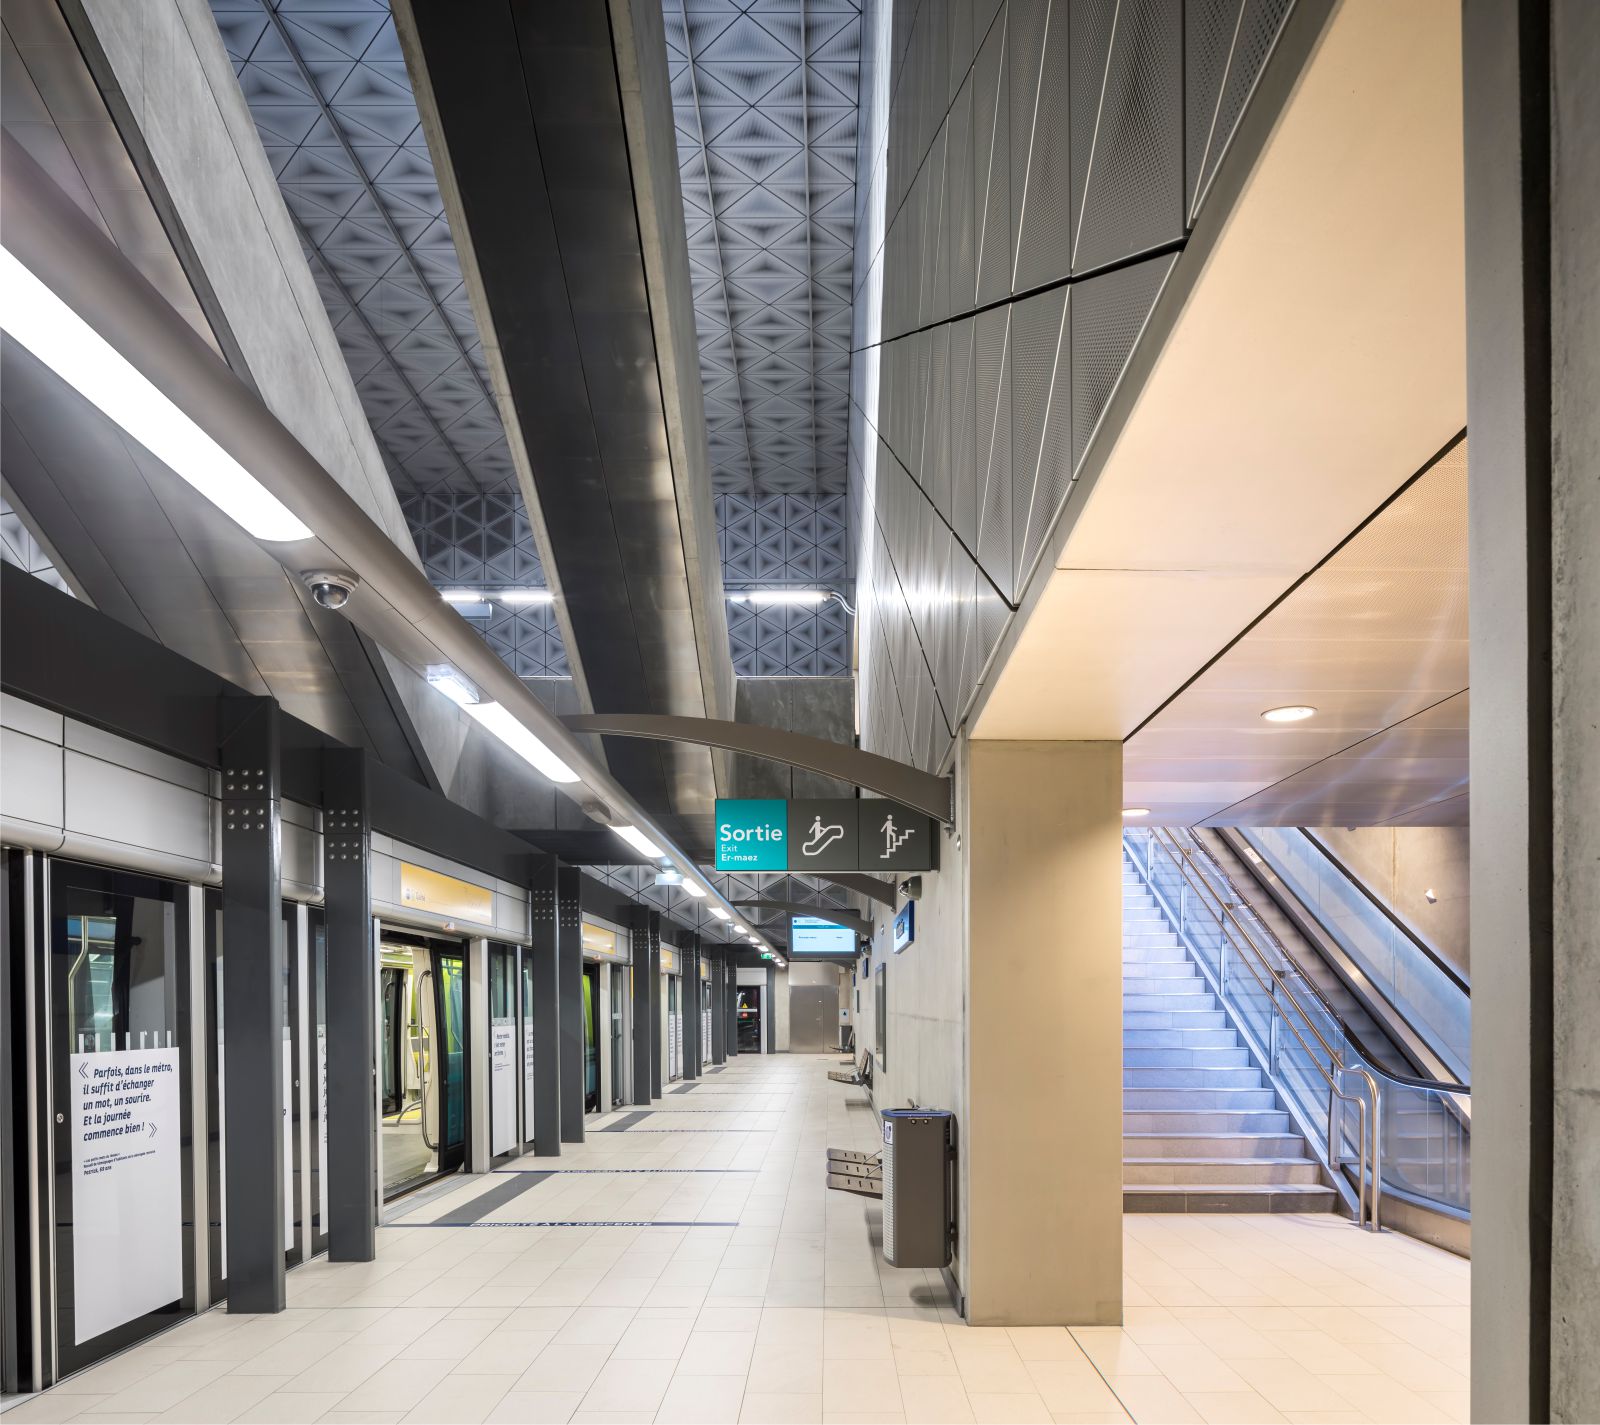 Metro stations